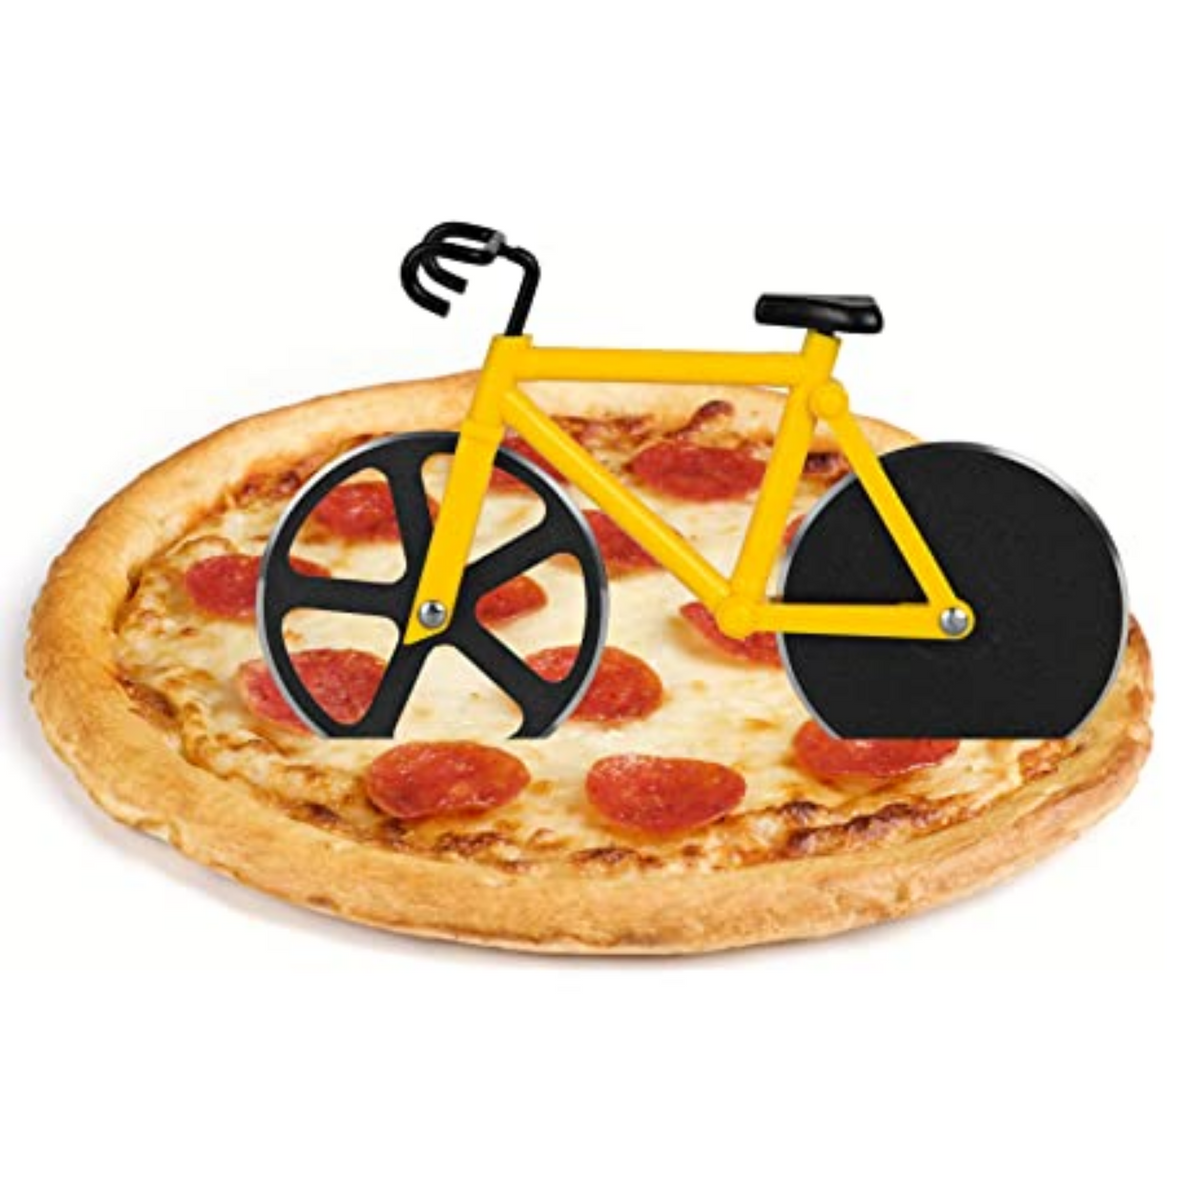 CORTA PIZZA BICYCLE